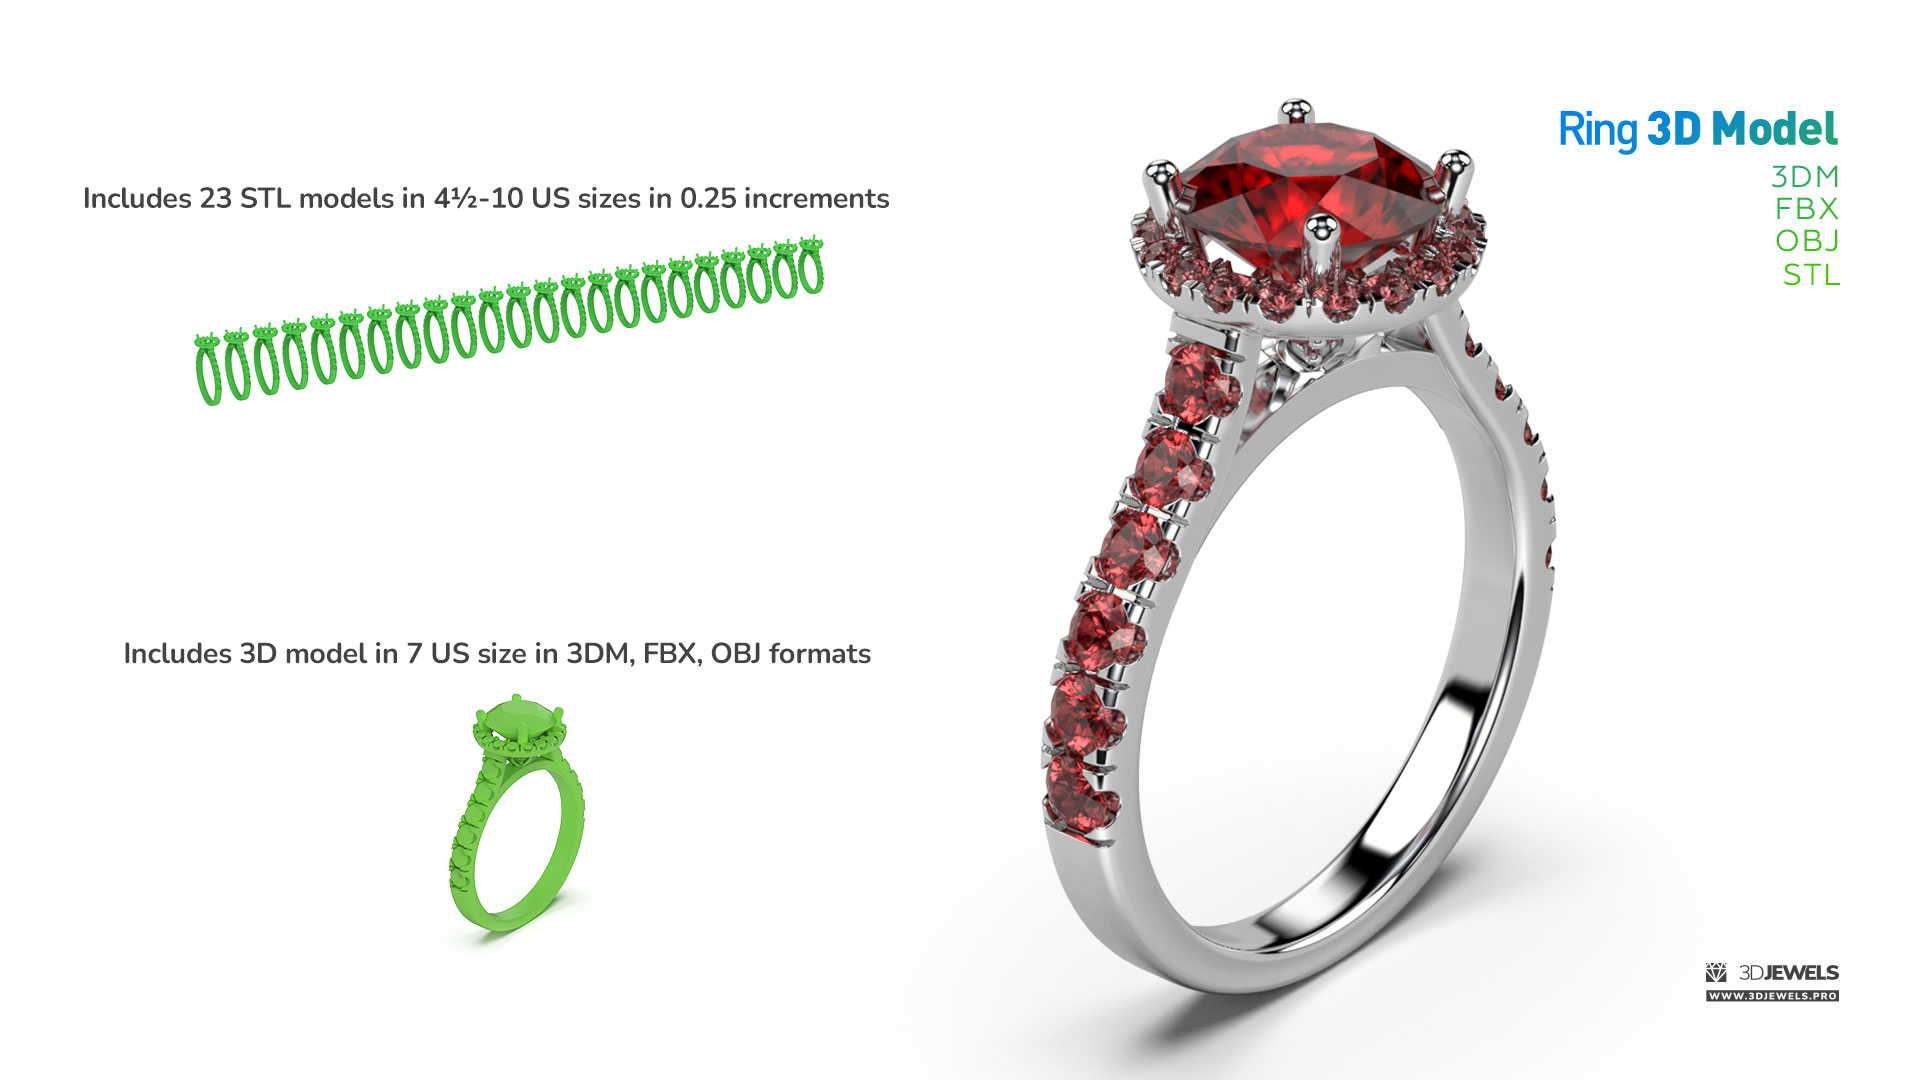 Men's Diamond Ring 3D Modeling Tutorial with Rhino 7 #237 - YouTube